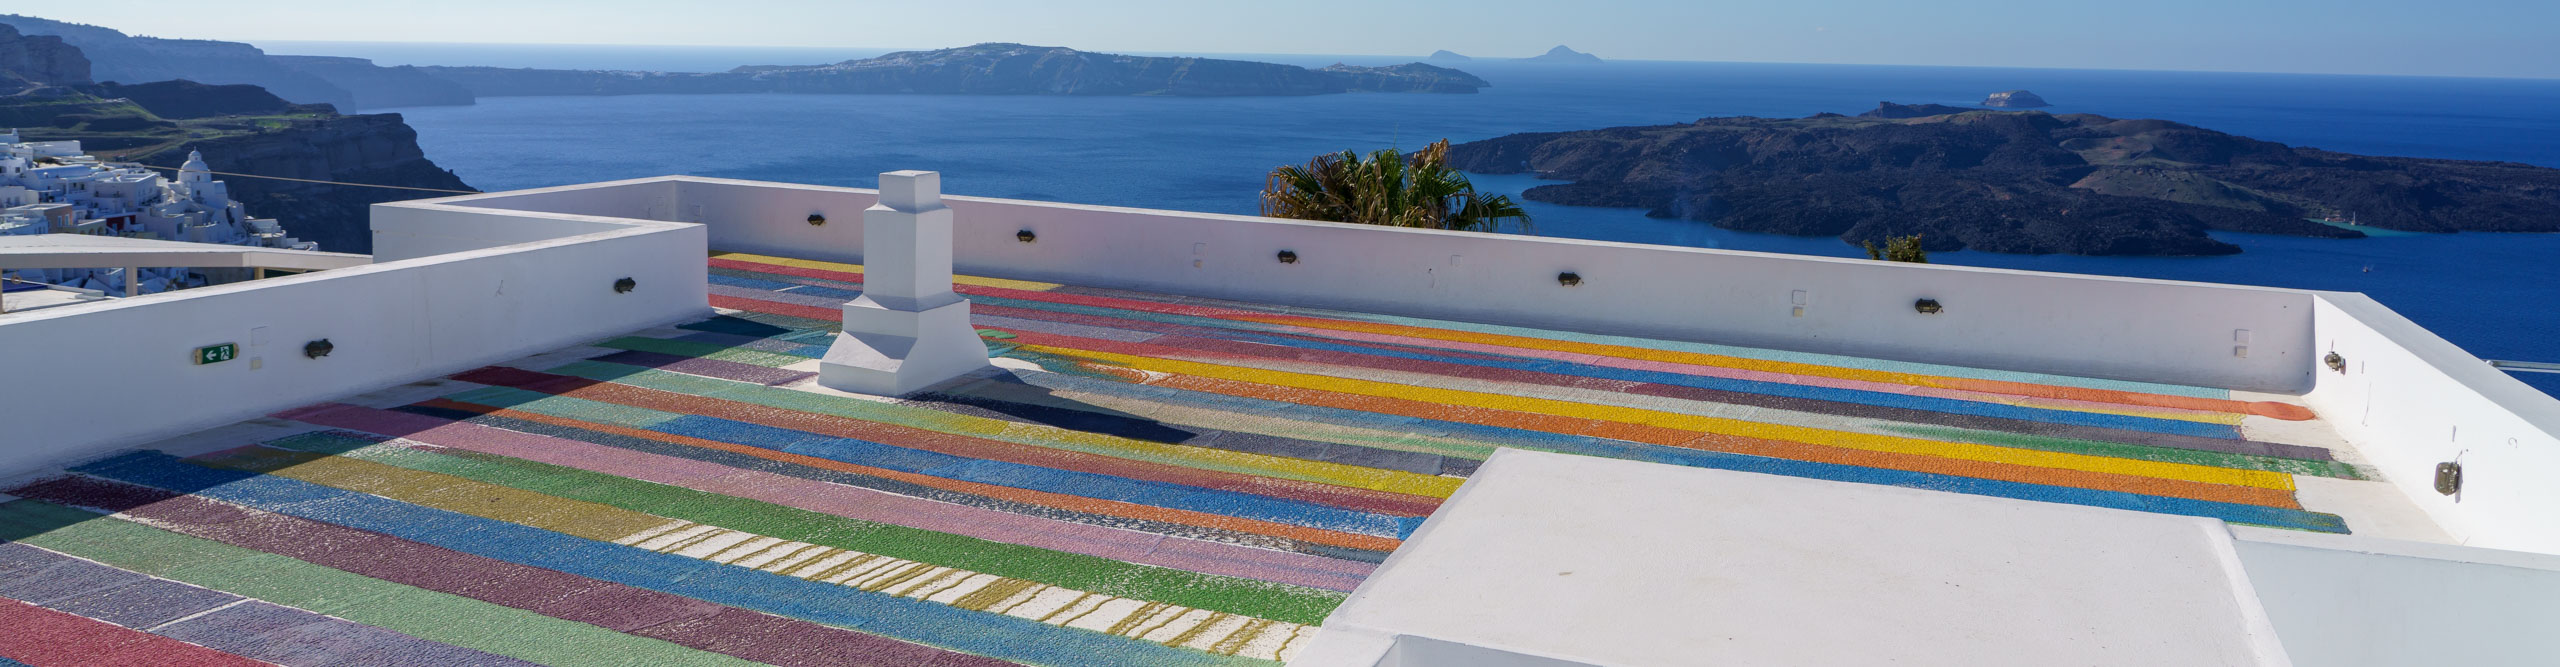 Rainbow coloured roof in Santorini